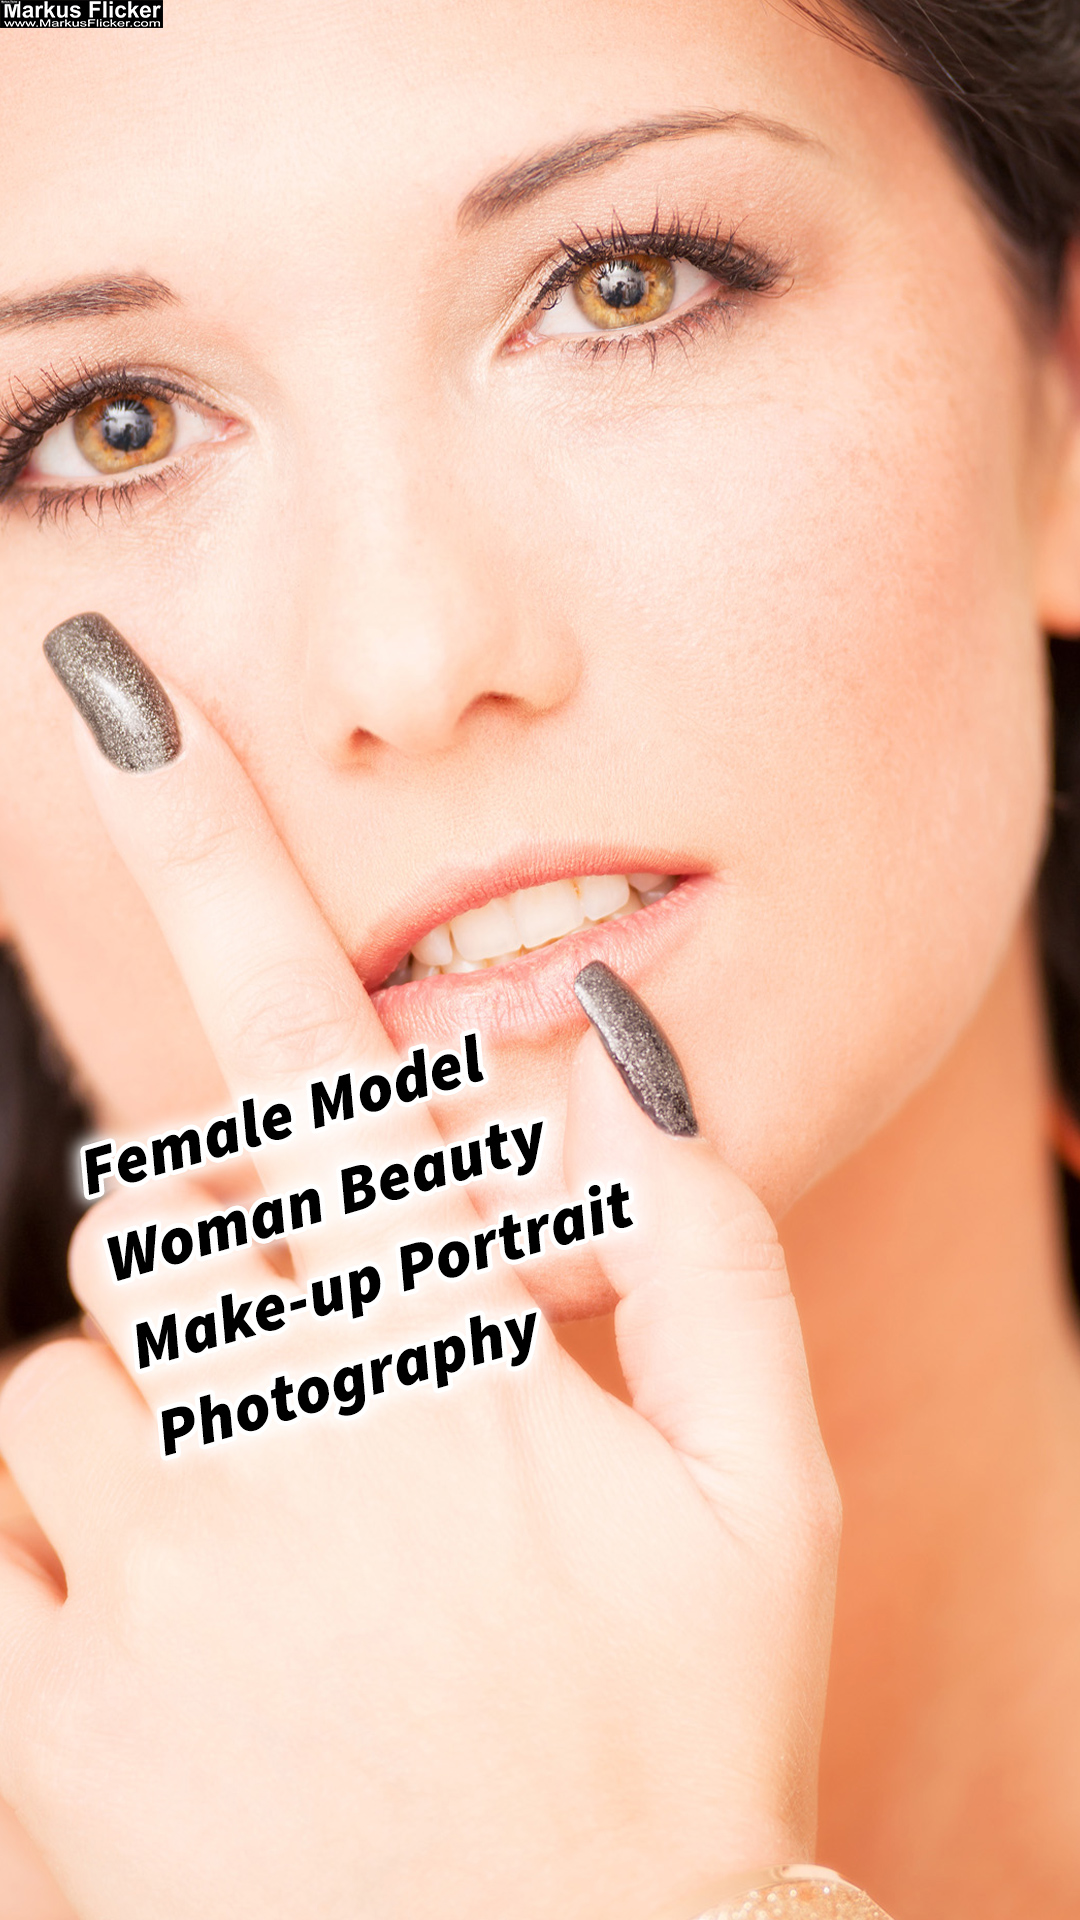 Female Model Woman Beauty Make-up Portrait Photography